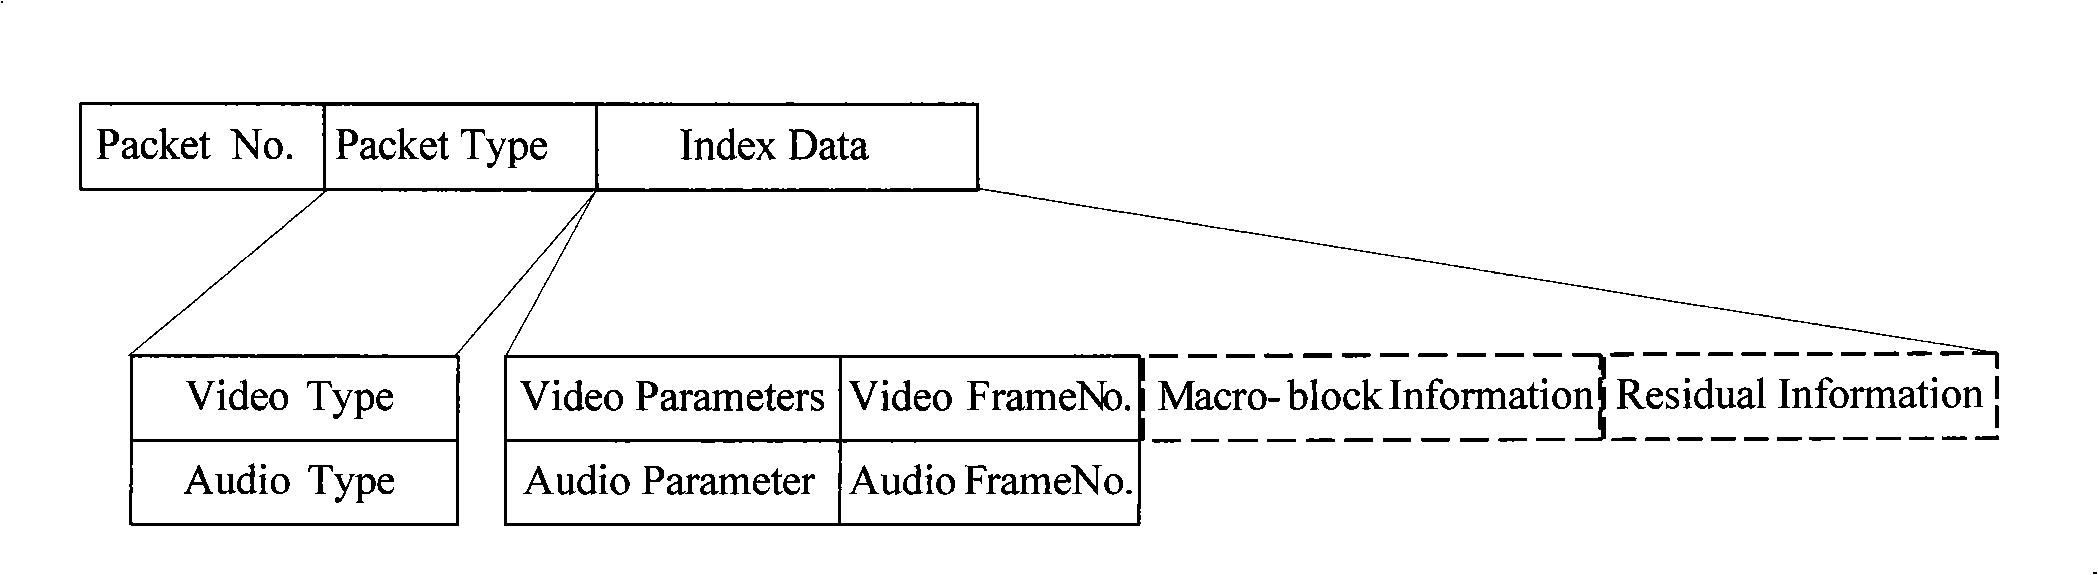 Monitoring method for multimedia data based on index